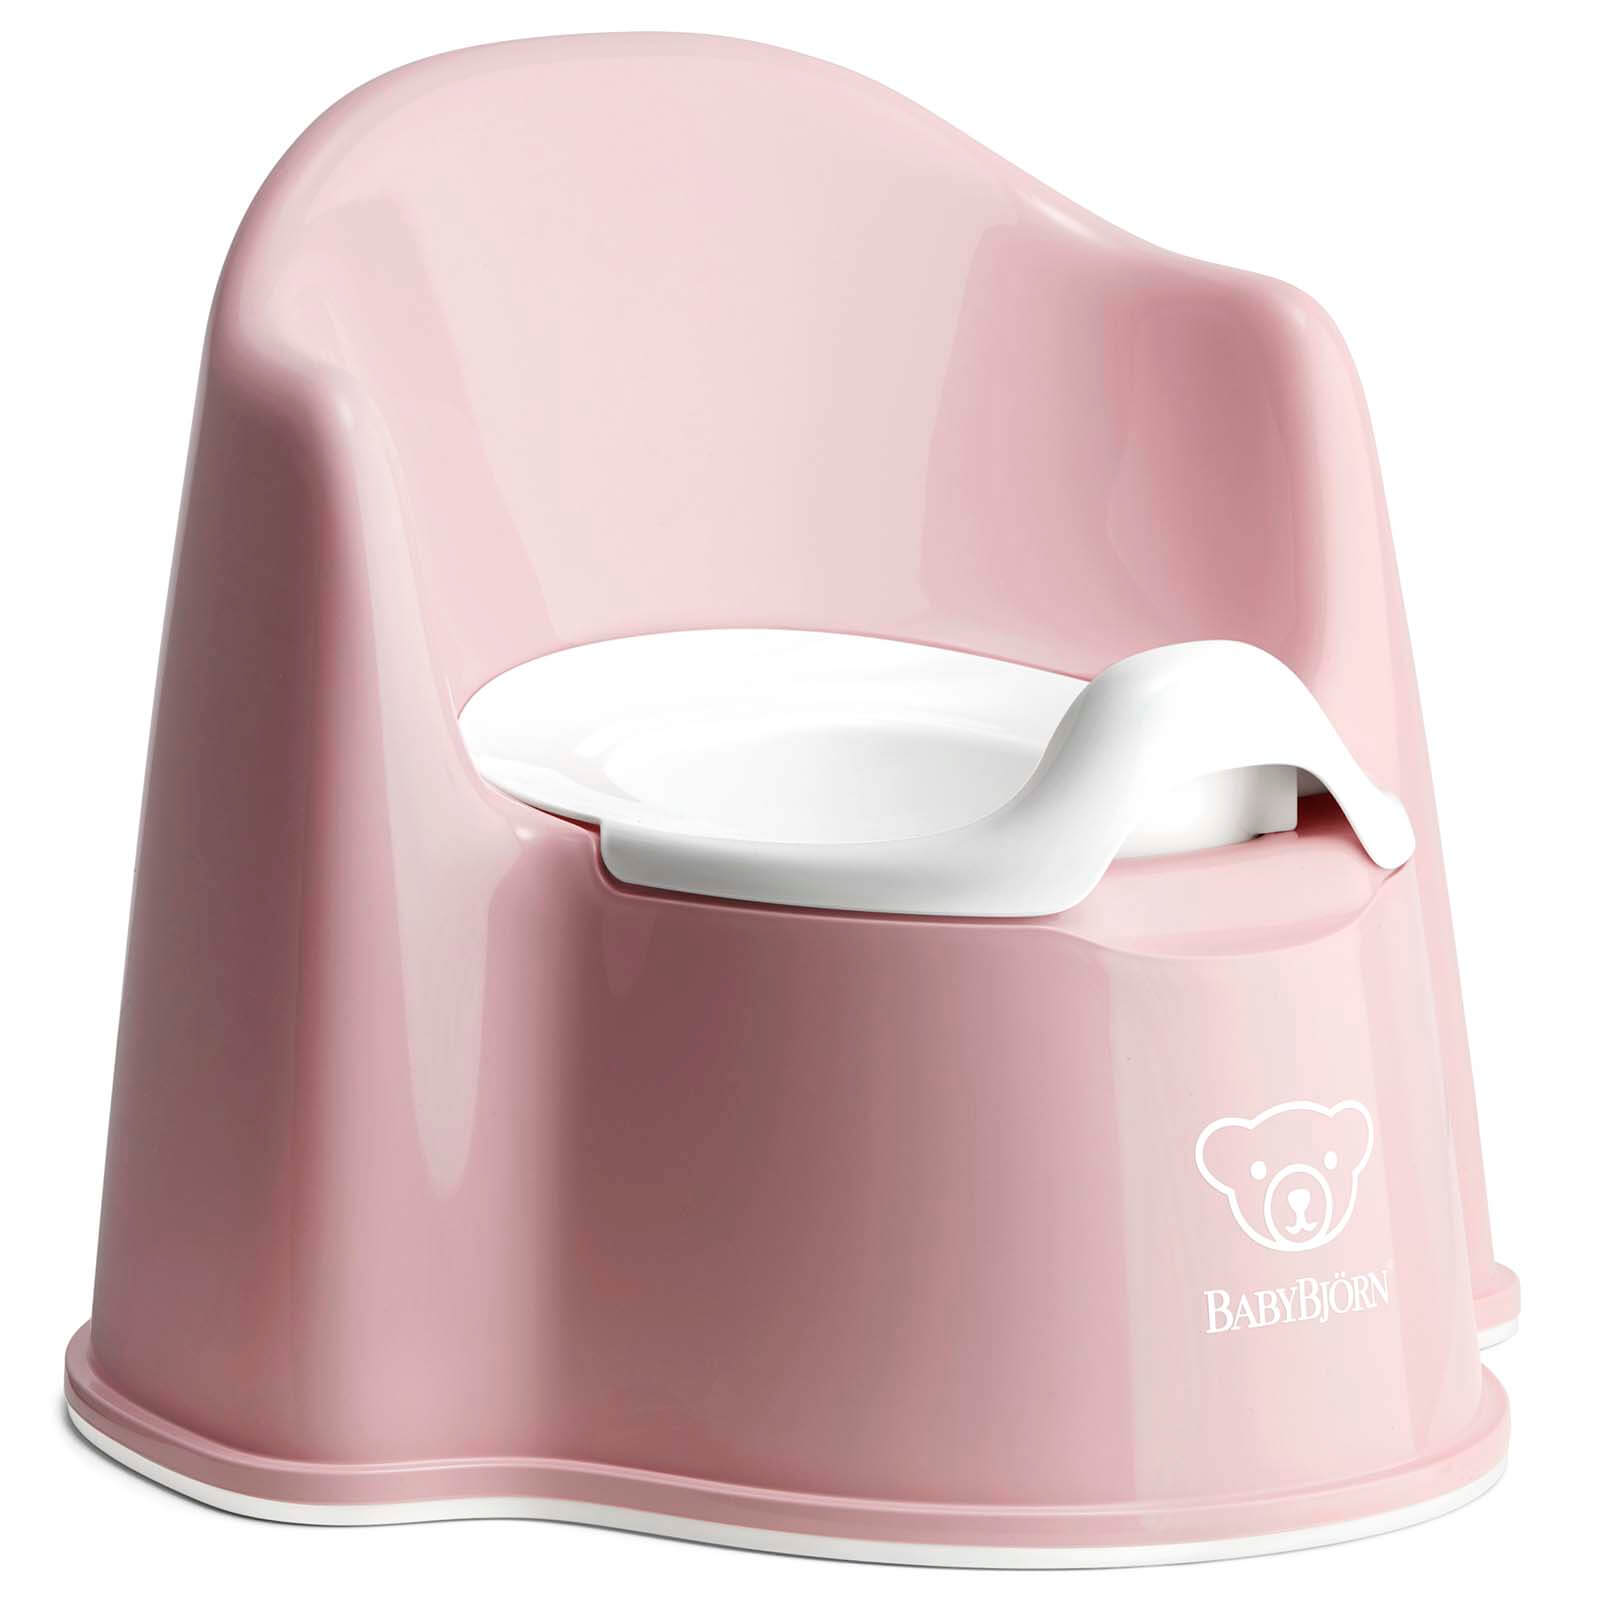 BABYBJORN Potty Chair - Pink